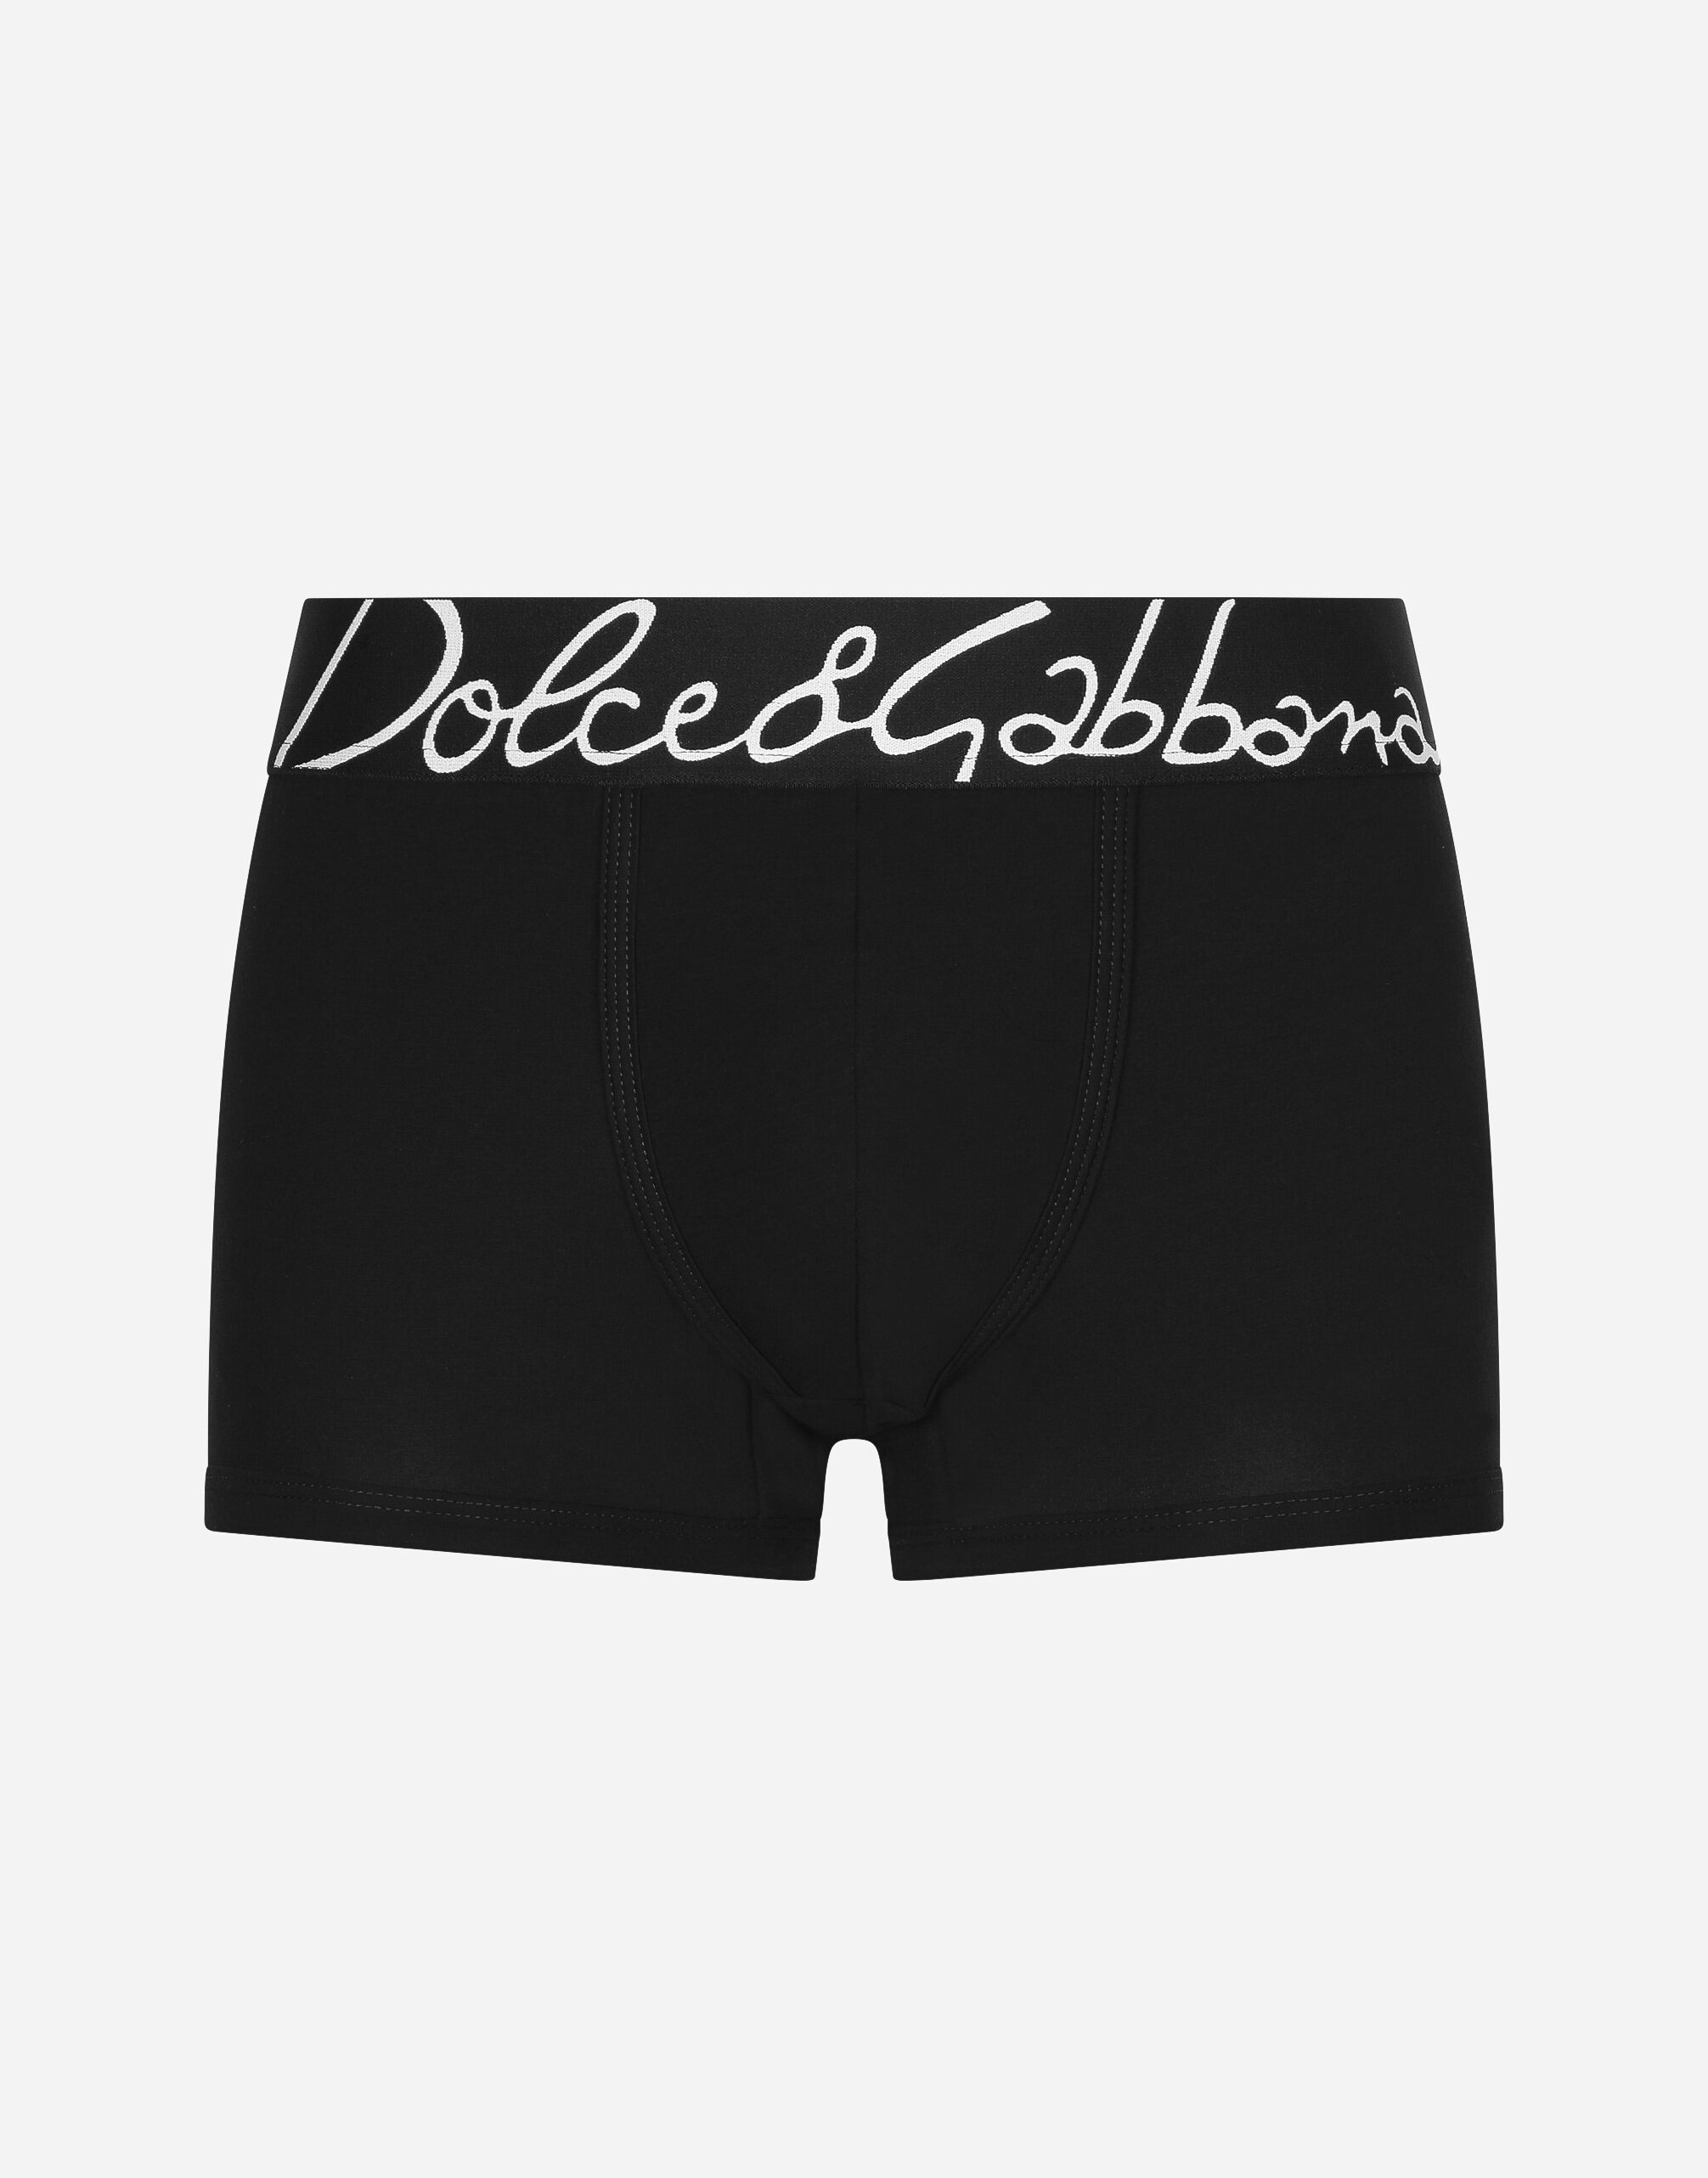 Dolce & Gabbana ボクサーショーツ レギュラー ストレッチコットン ブラック M9C03JONN95